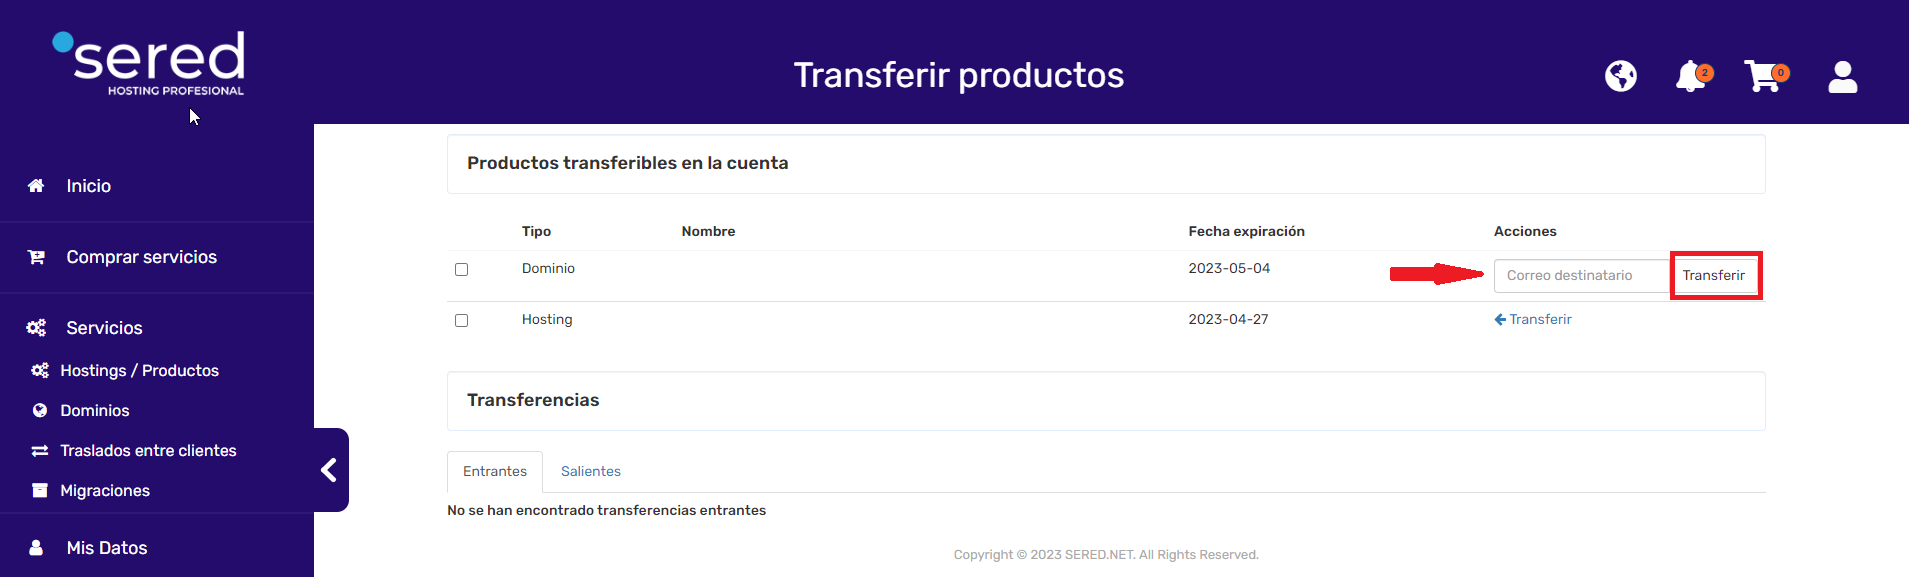 transferir productos SERED.NET